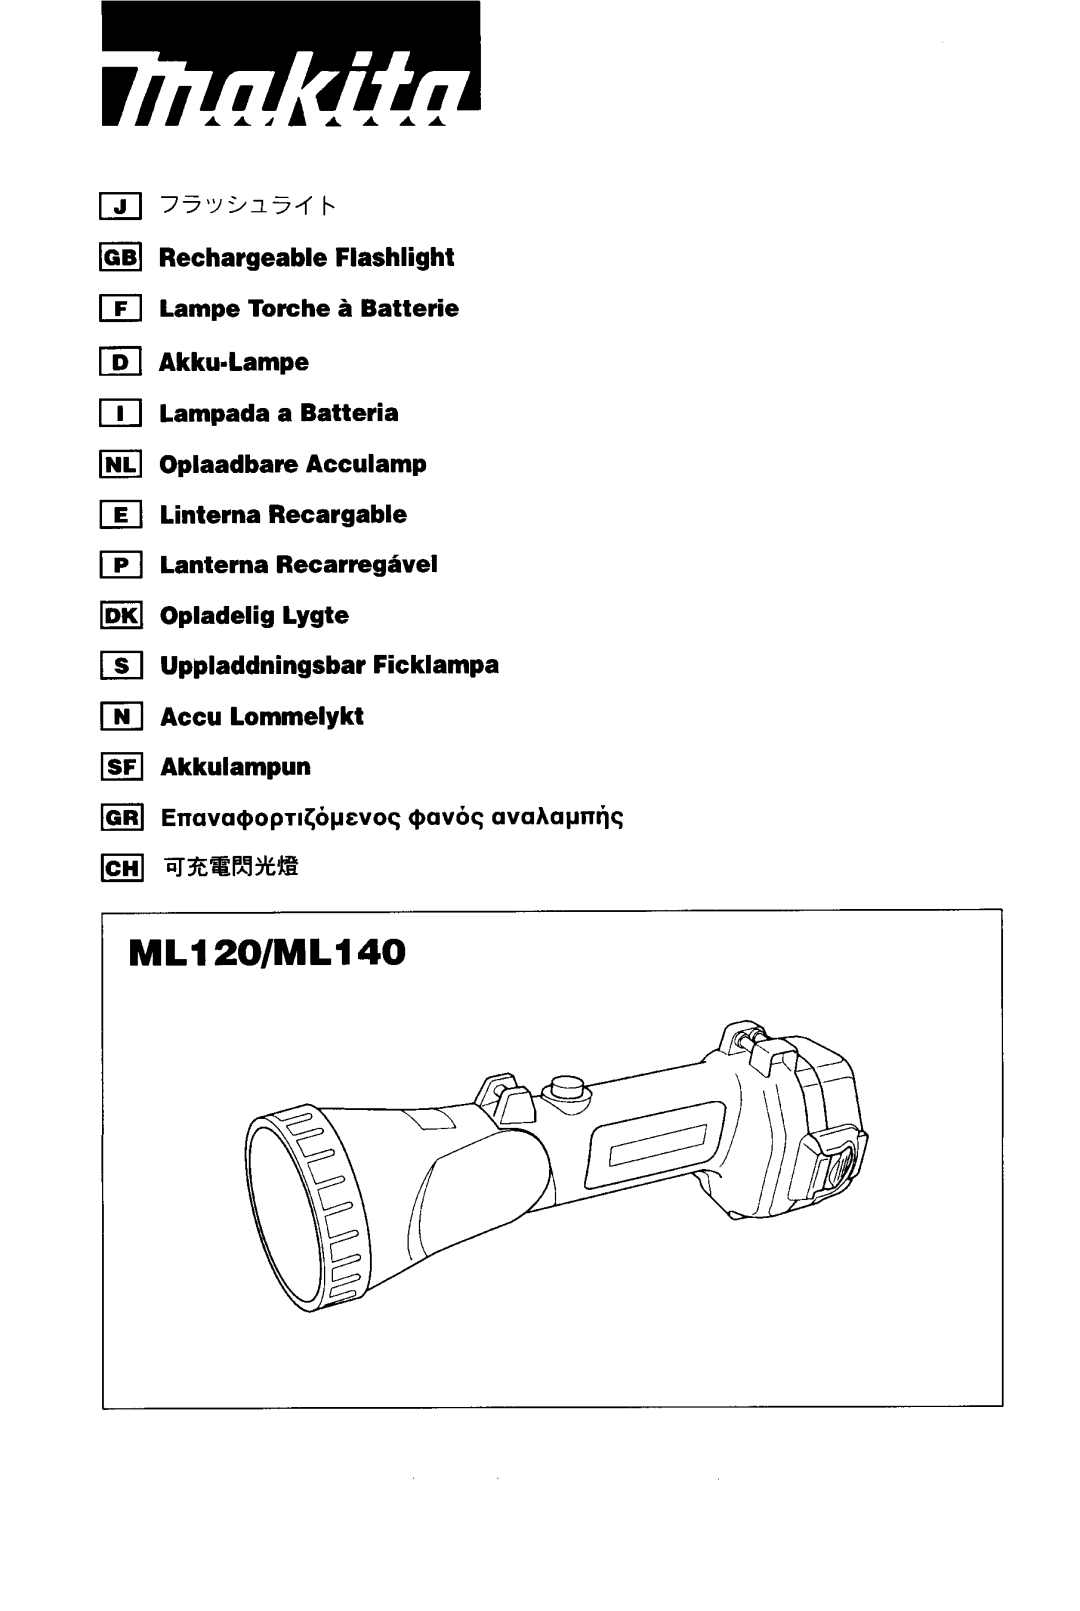 Makita ML140 manual Page 1 of, 12/8/200, Parts Breakdown 